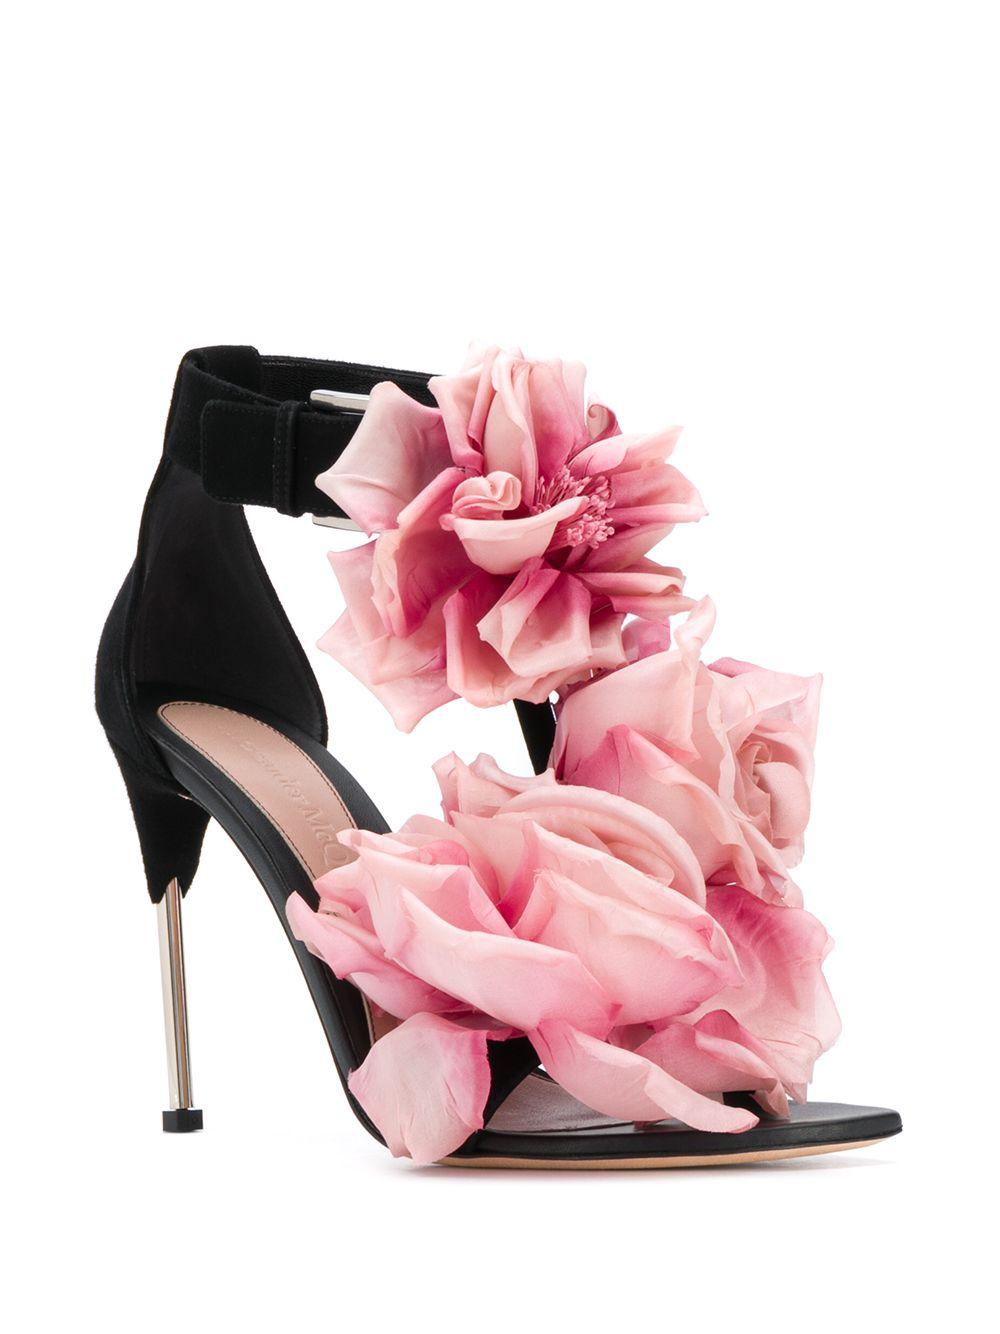 Alexander McQueen Floral Embellished Sandals in Black | Lyst Australia